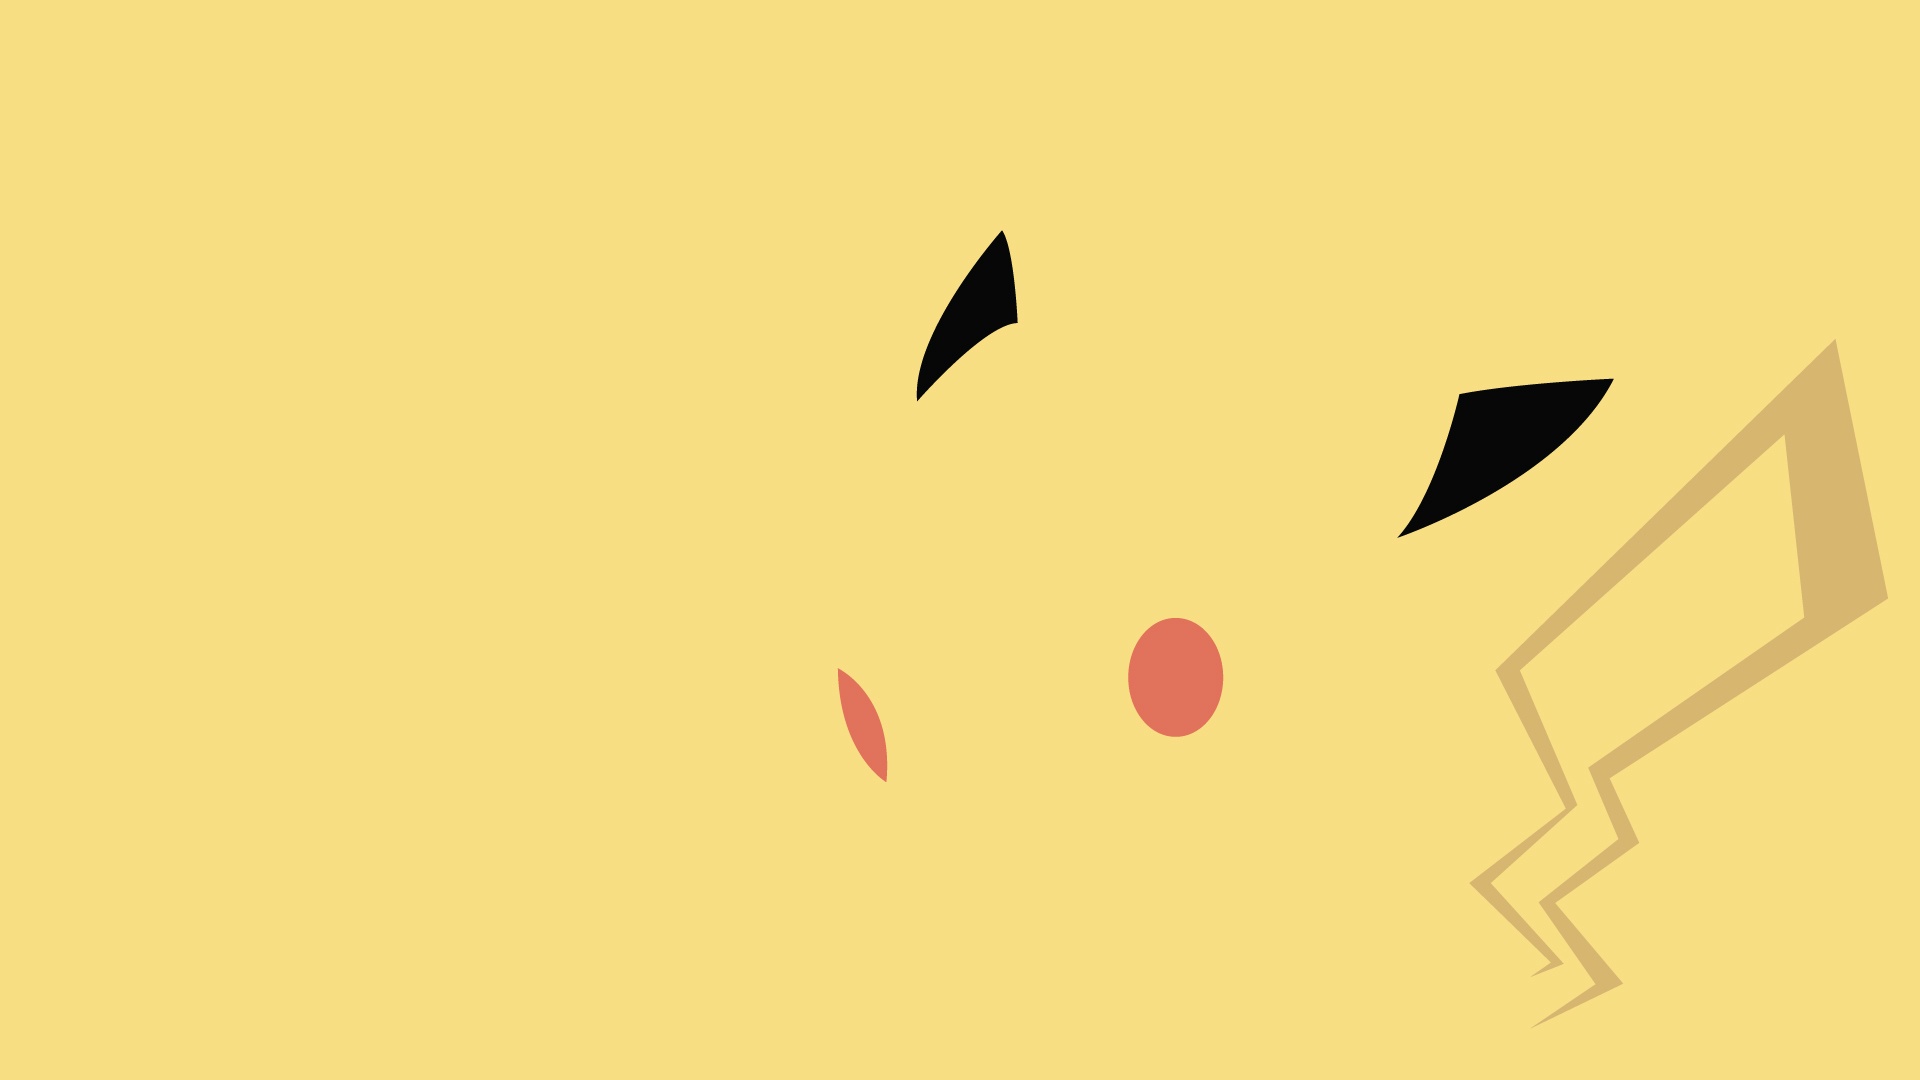 Abstract Pokemon Pikachu Wallpaper HD Full Size